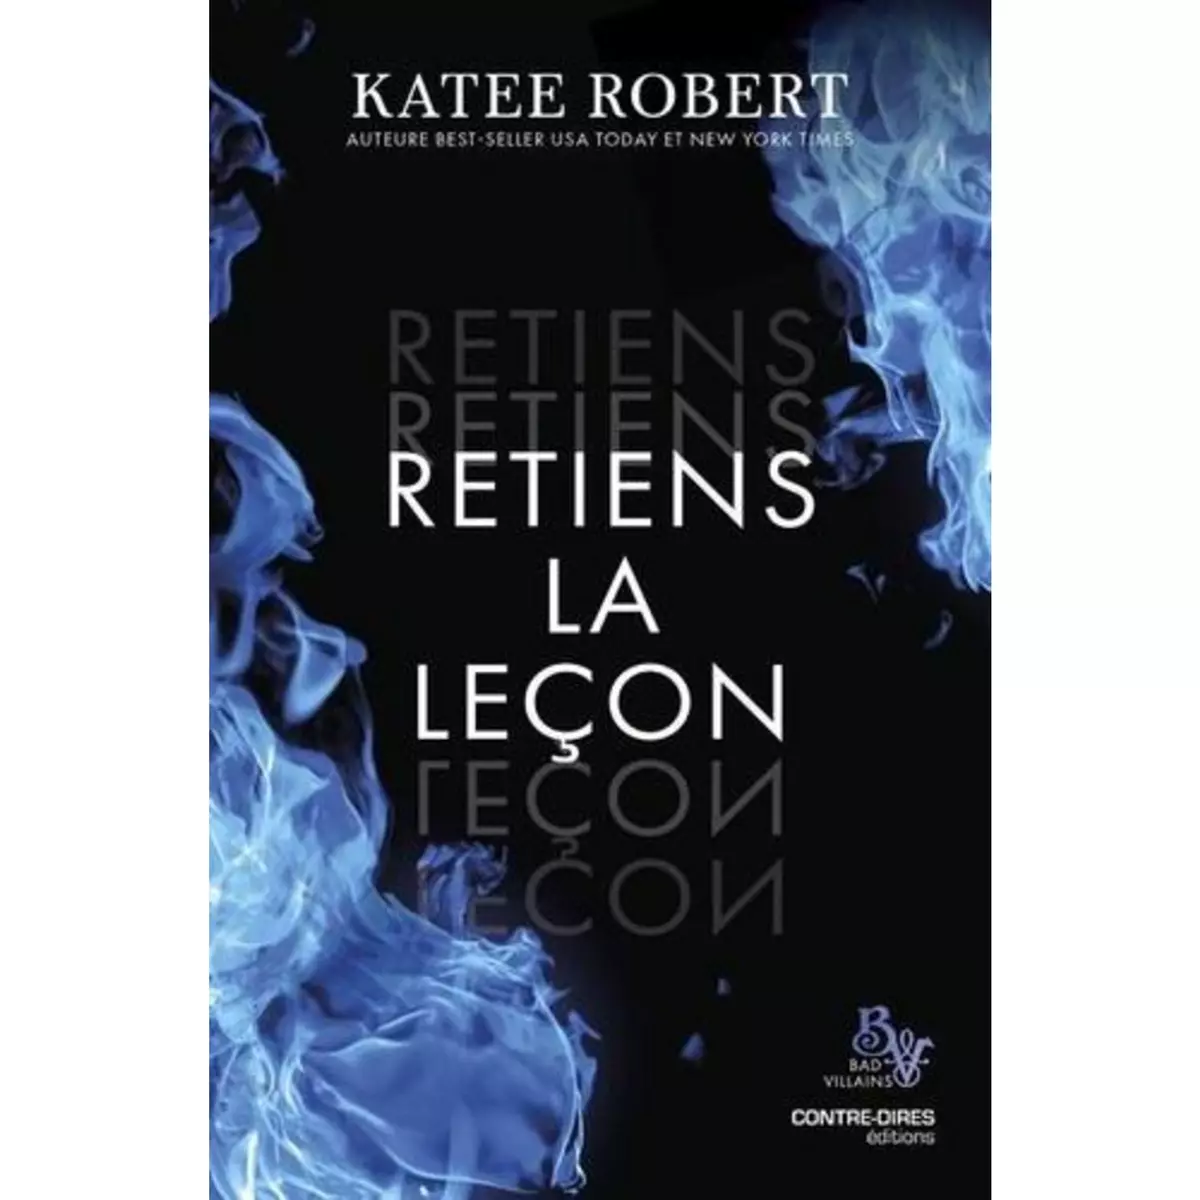  RETIENS LA LECON. BAD VILLAINS, Robert Katee